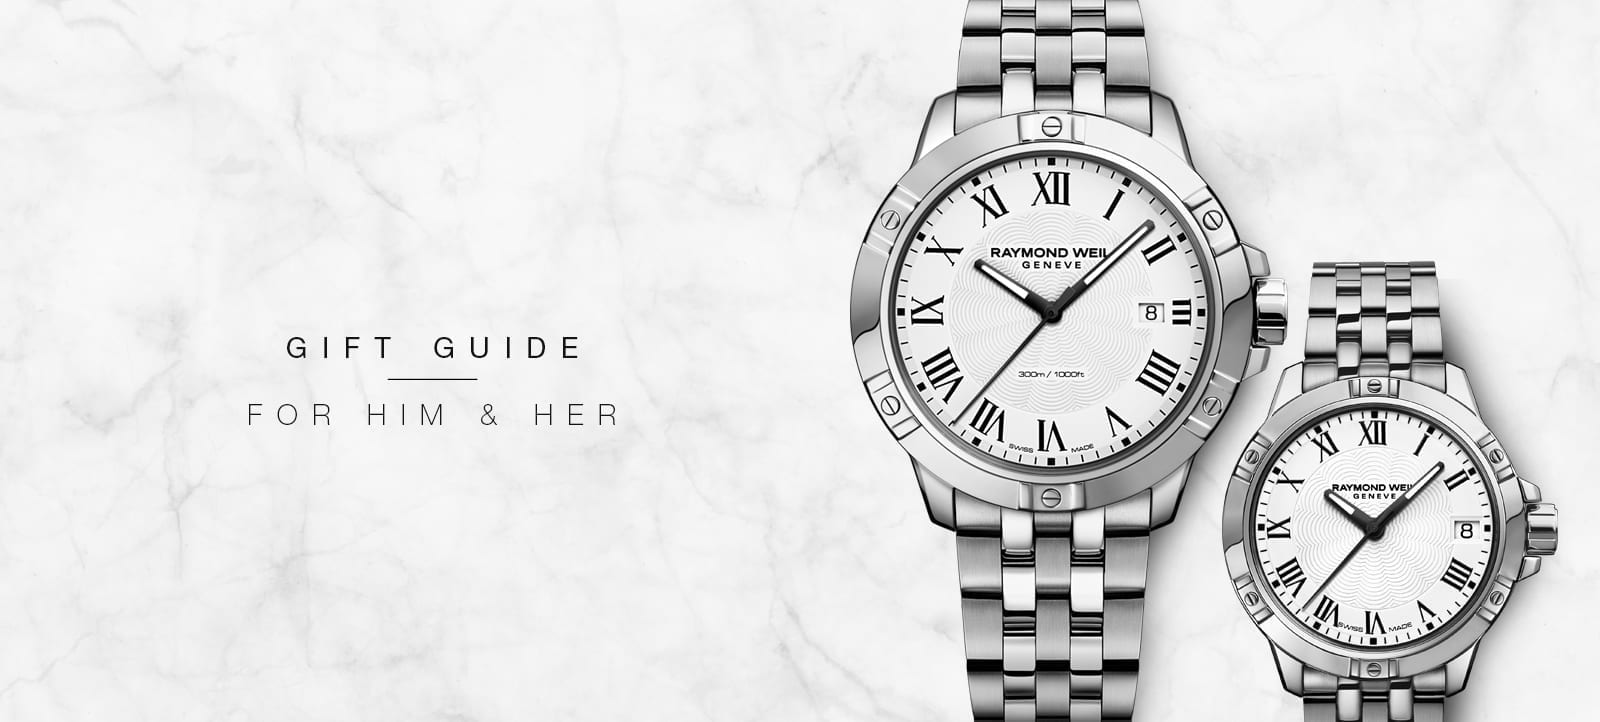 Cartier Santos 100 Diamond Watch Replica